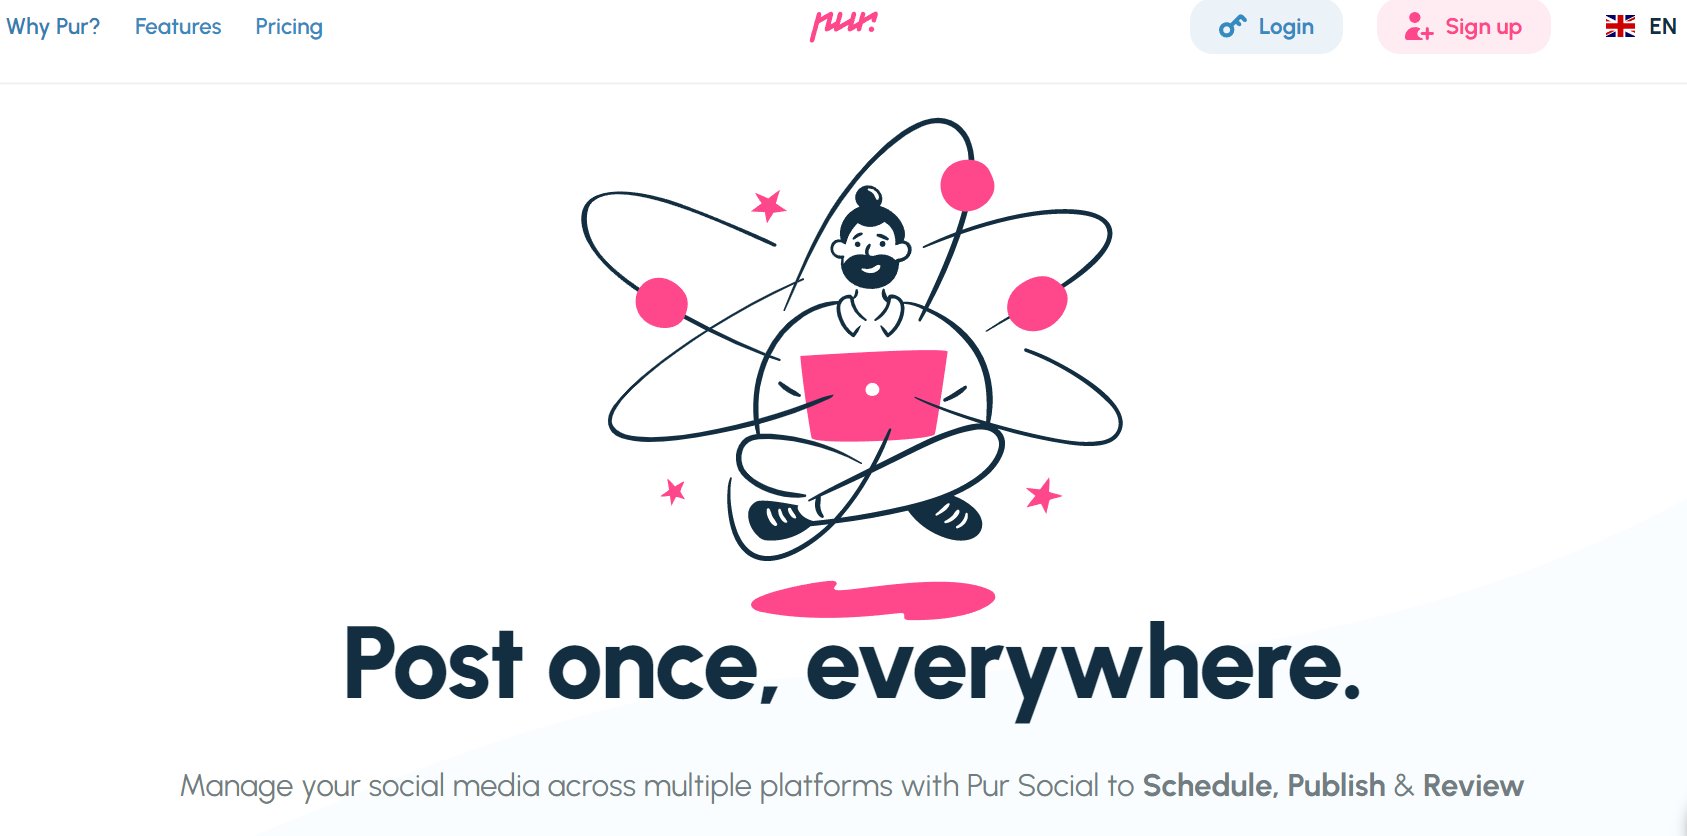 Pur Social platform for Social media management